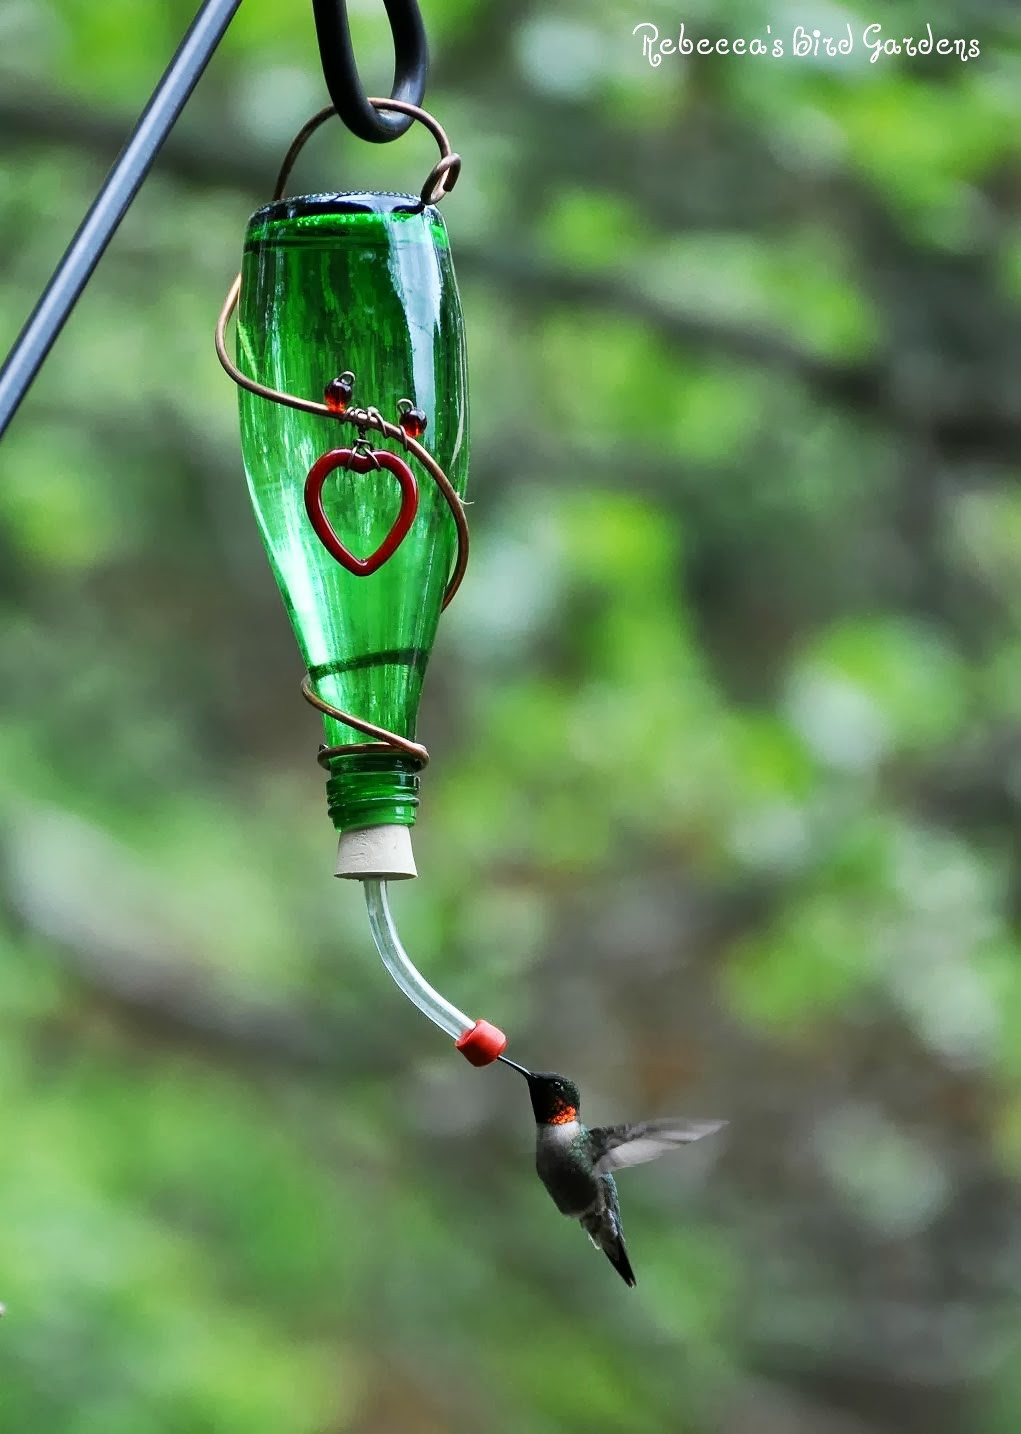 Best ideas about DIY Wine Bottle Hummingbird Feeder
. Save or Pin Rebecca s Bird Gardens Blog DIY Fruit and Hummingbird Feeders Now.